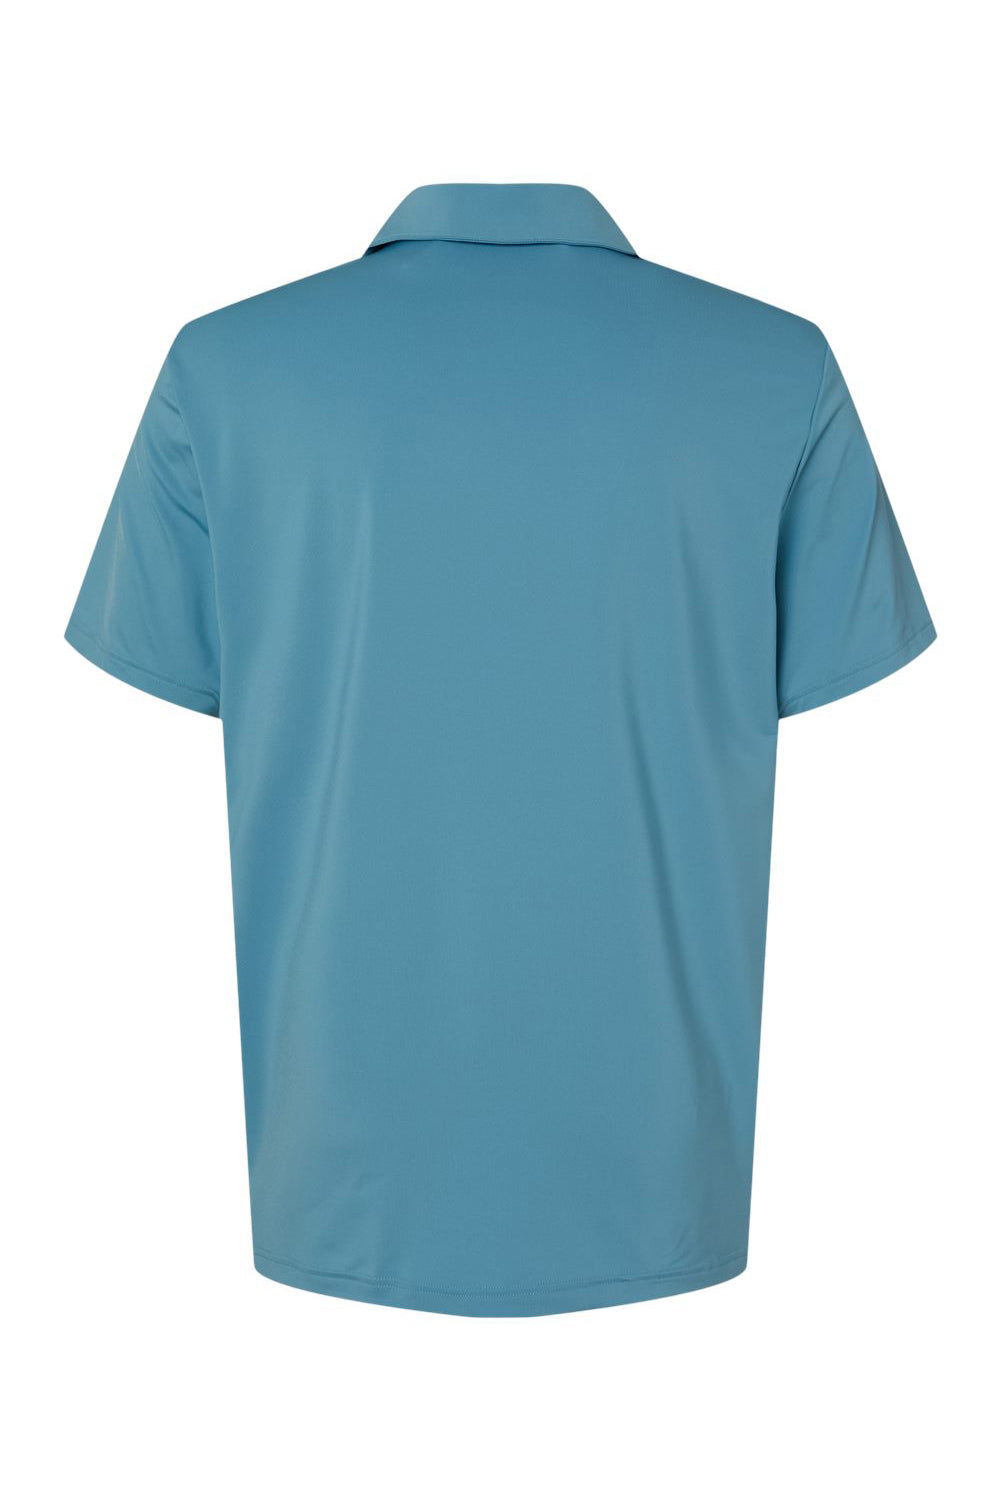 Adidas A514 Mens Ultimate Short Sleeve Polo Shirt Hazy Blue Flat Back